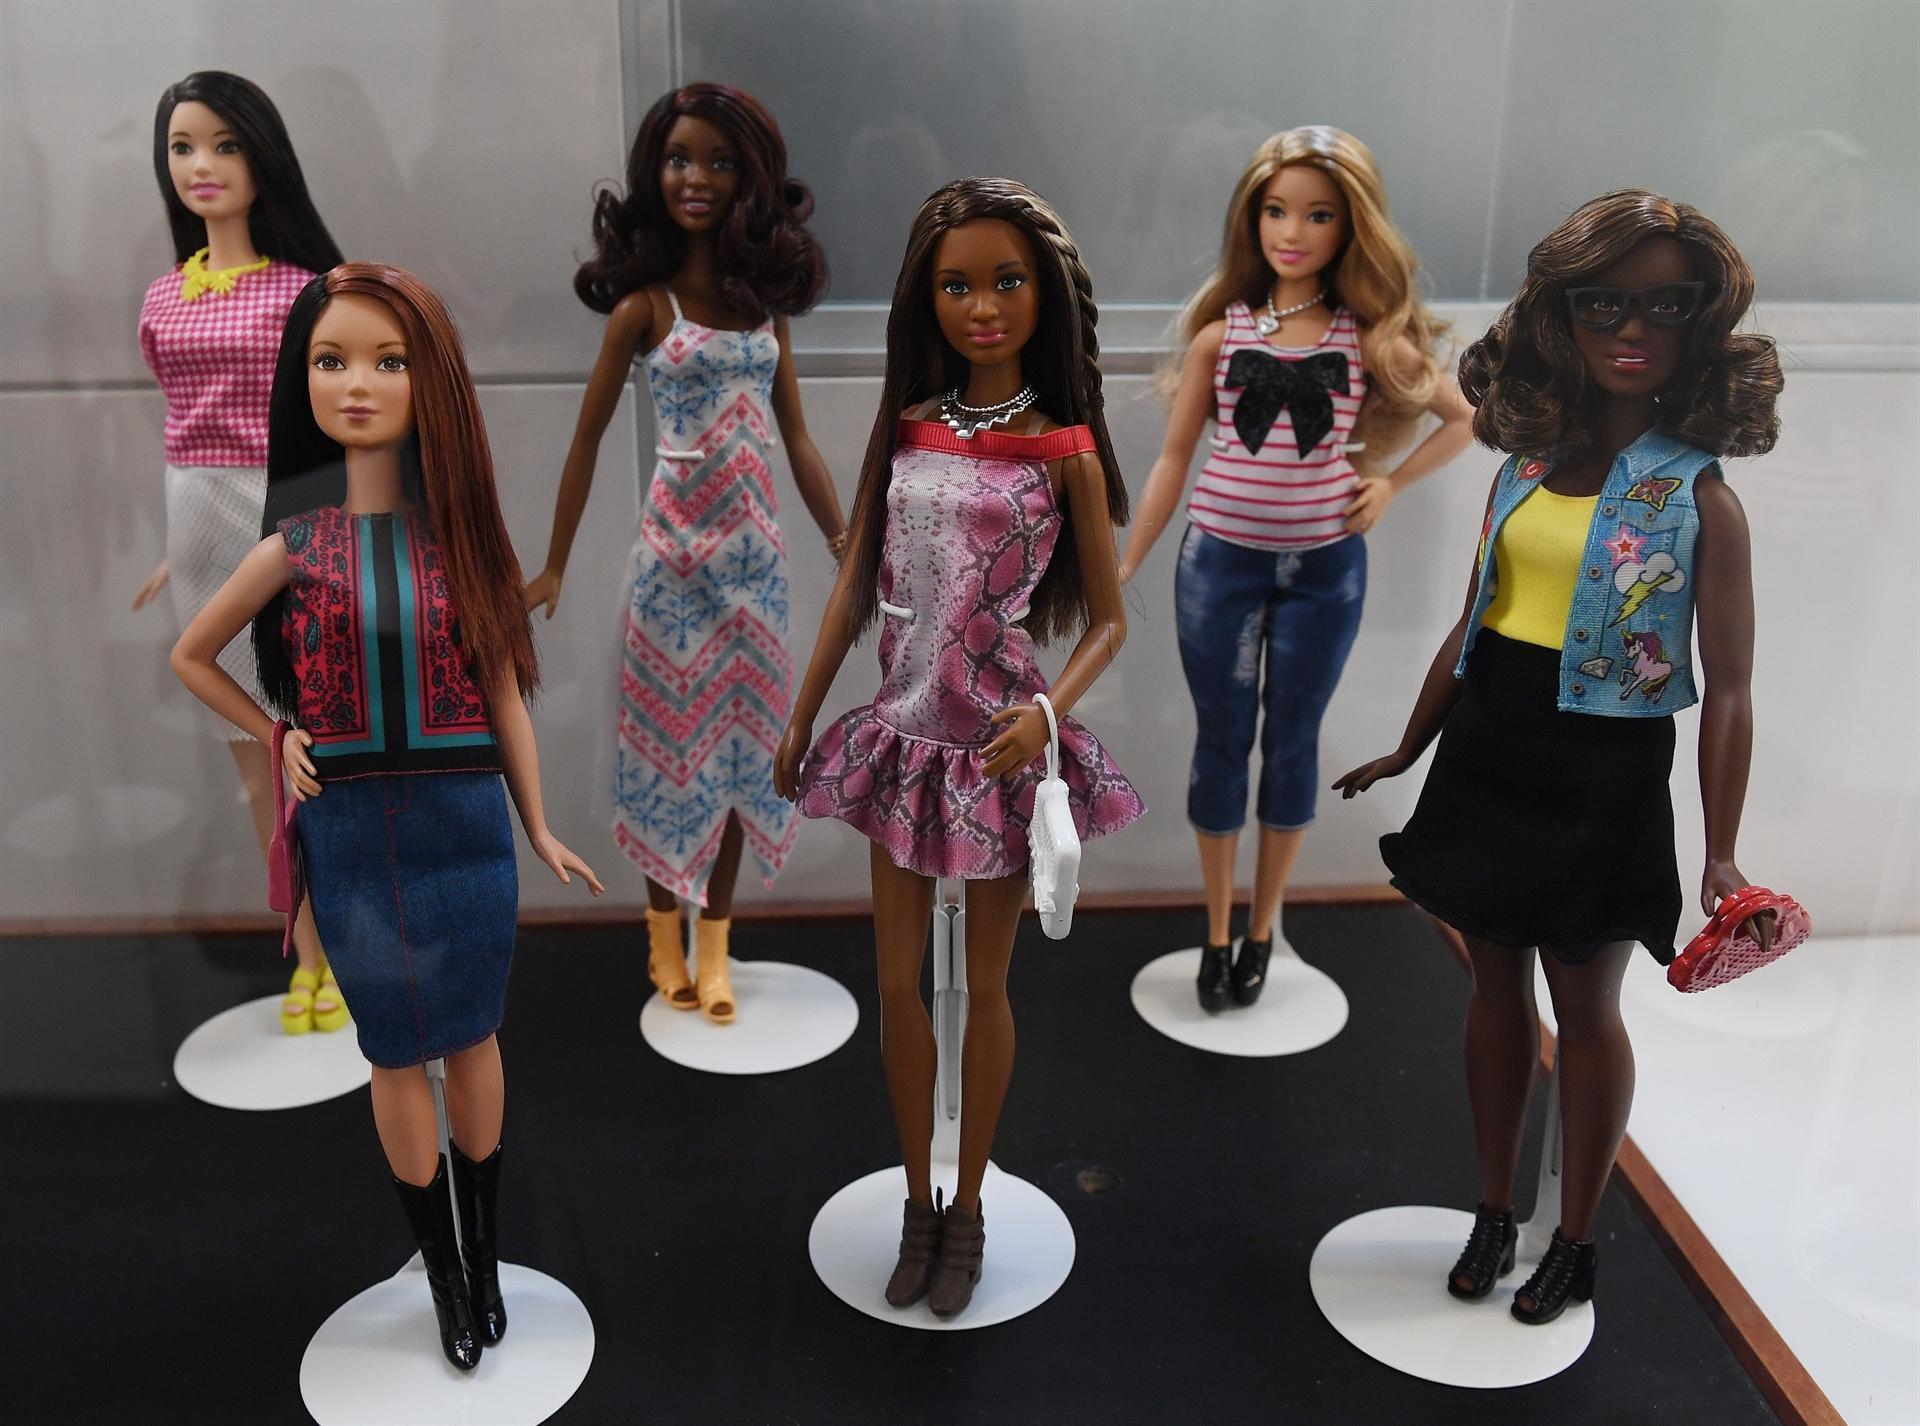 Barbie Doll: Every Girl's childhood friend Turns 60!